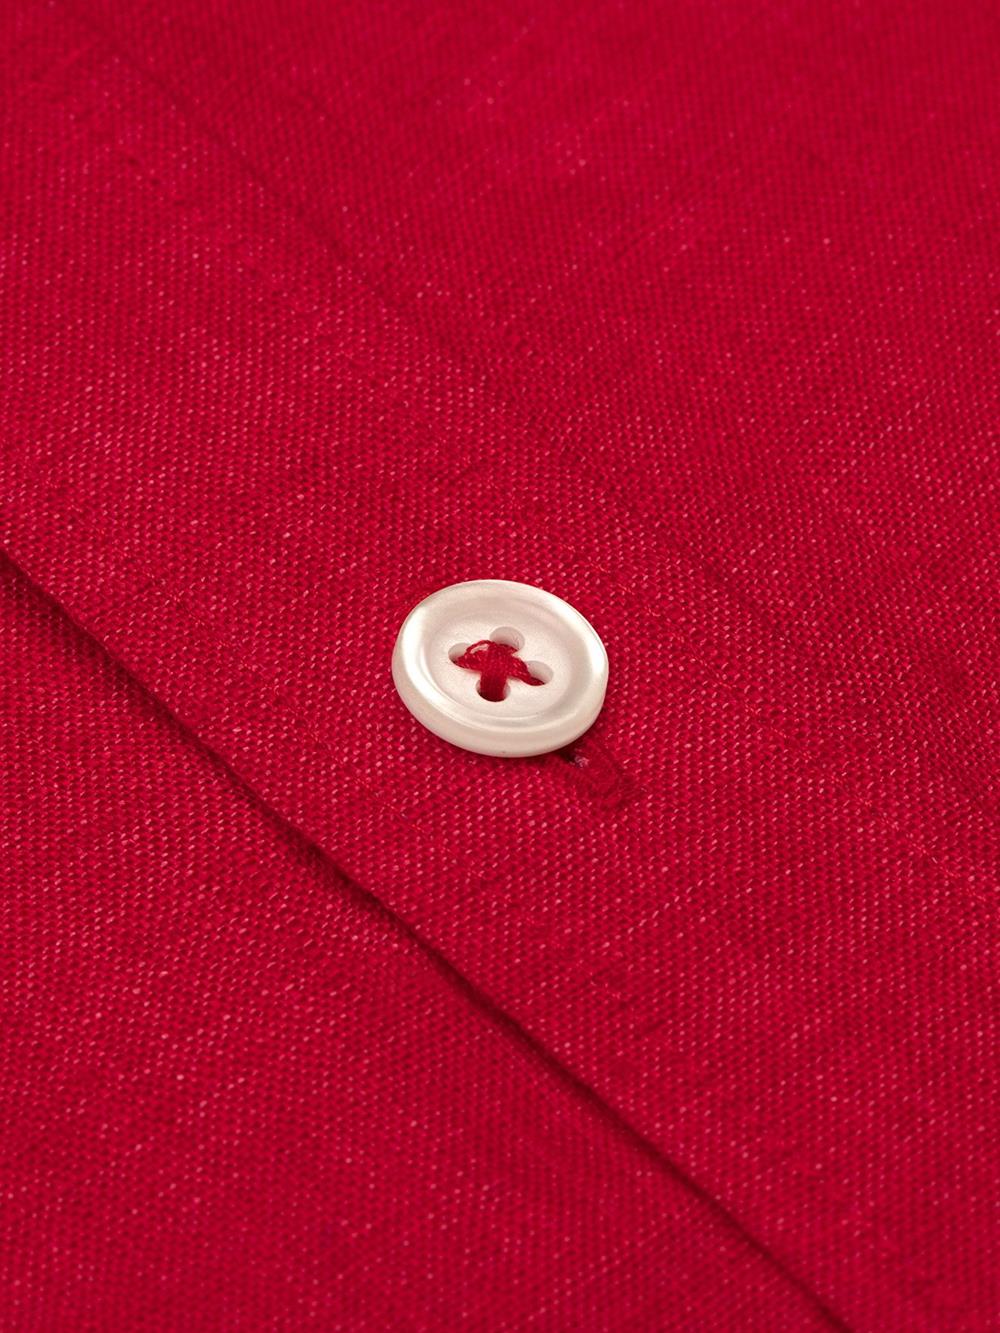 Red linen slim fit shirt 